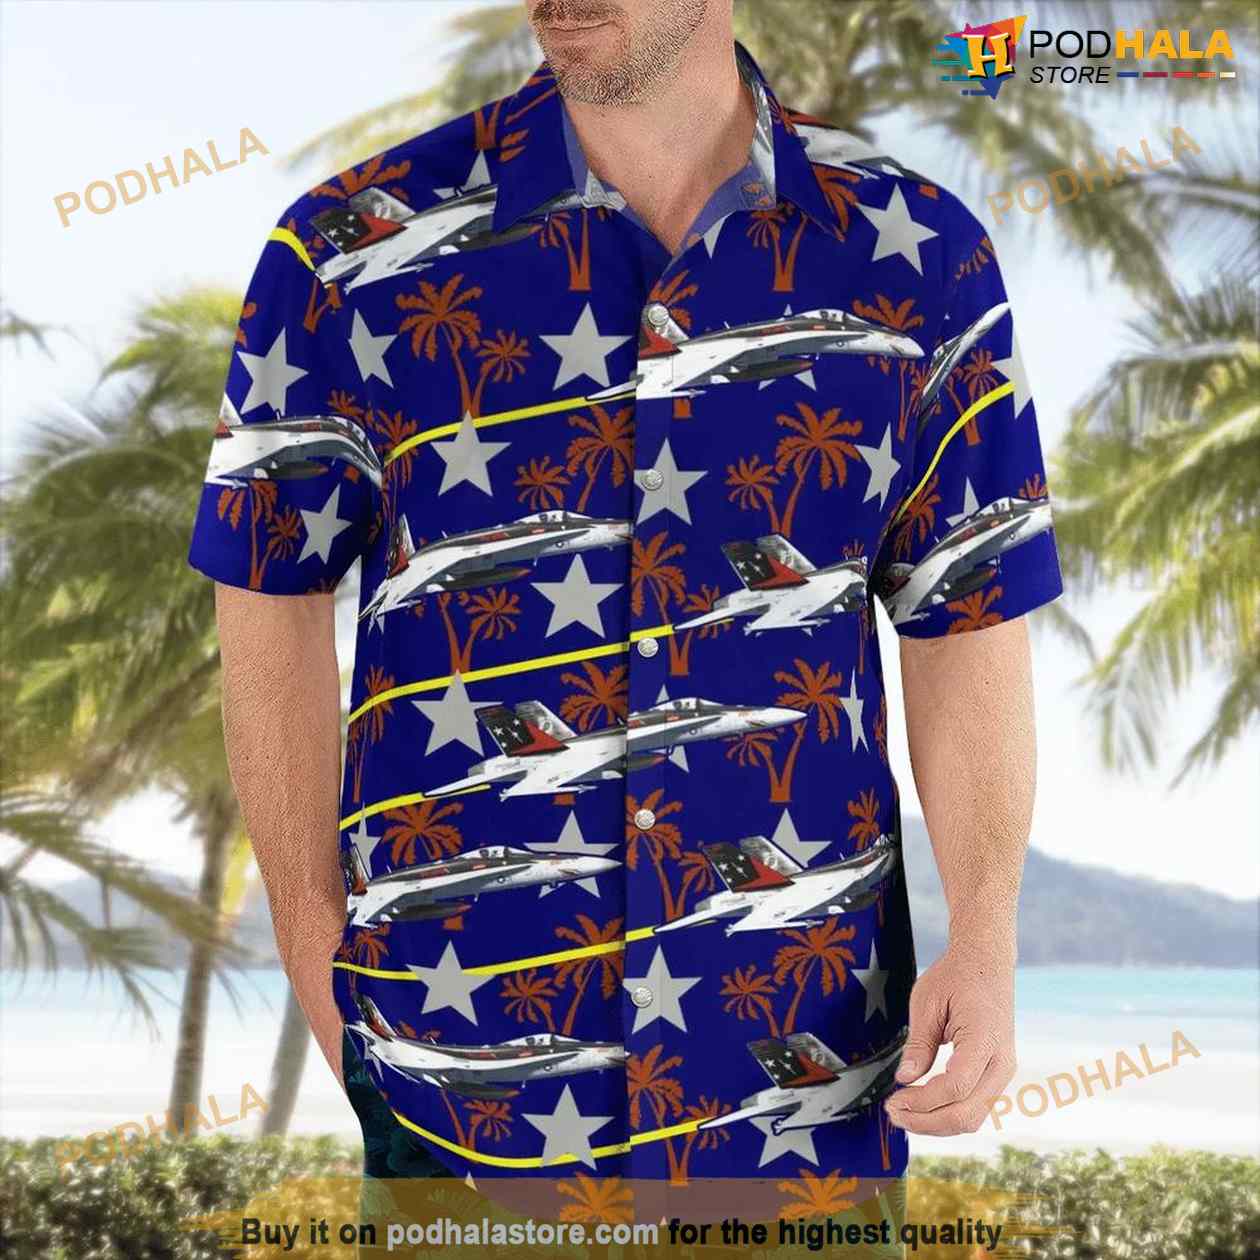 Hawaiian Shirt Outfit Ideas For Women